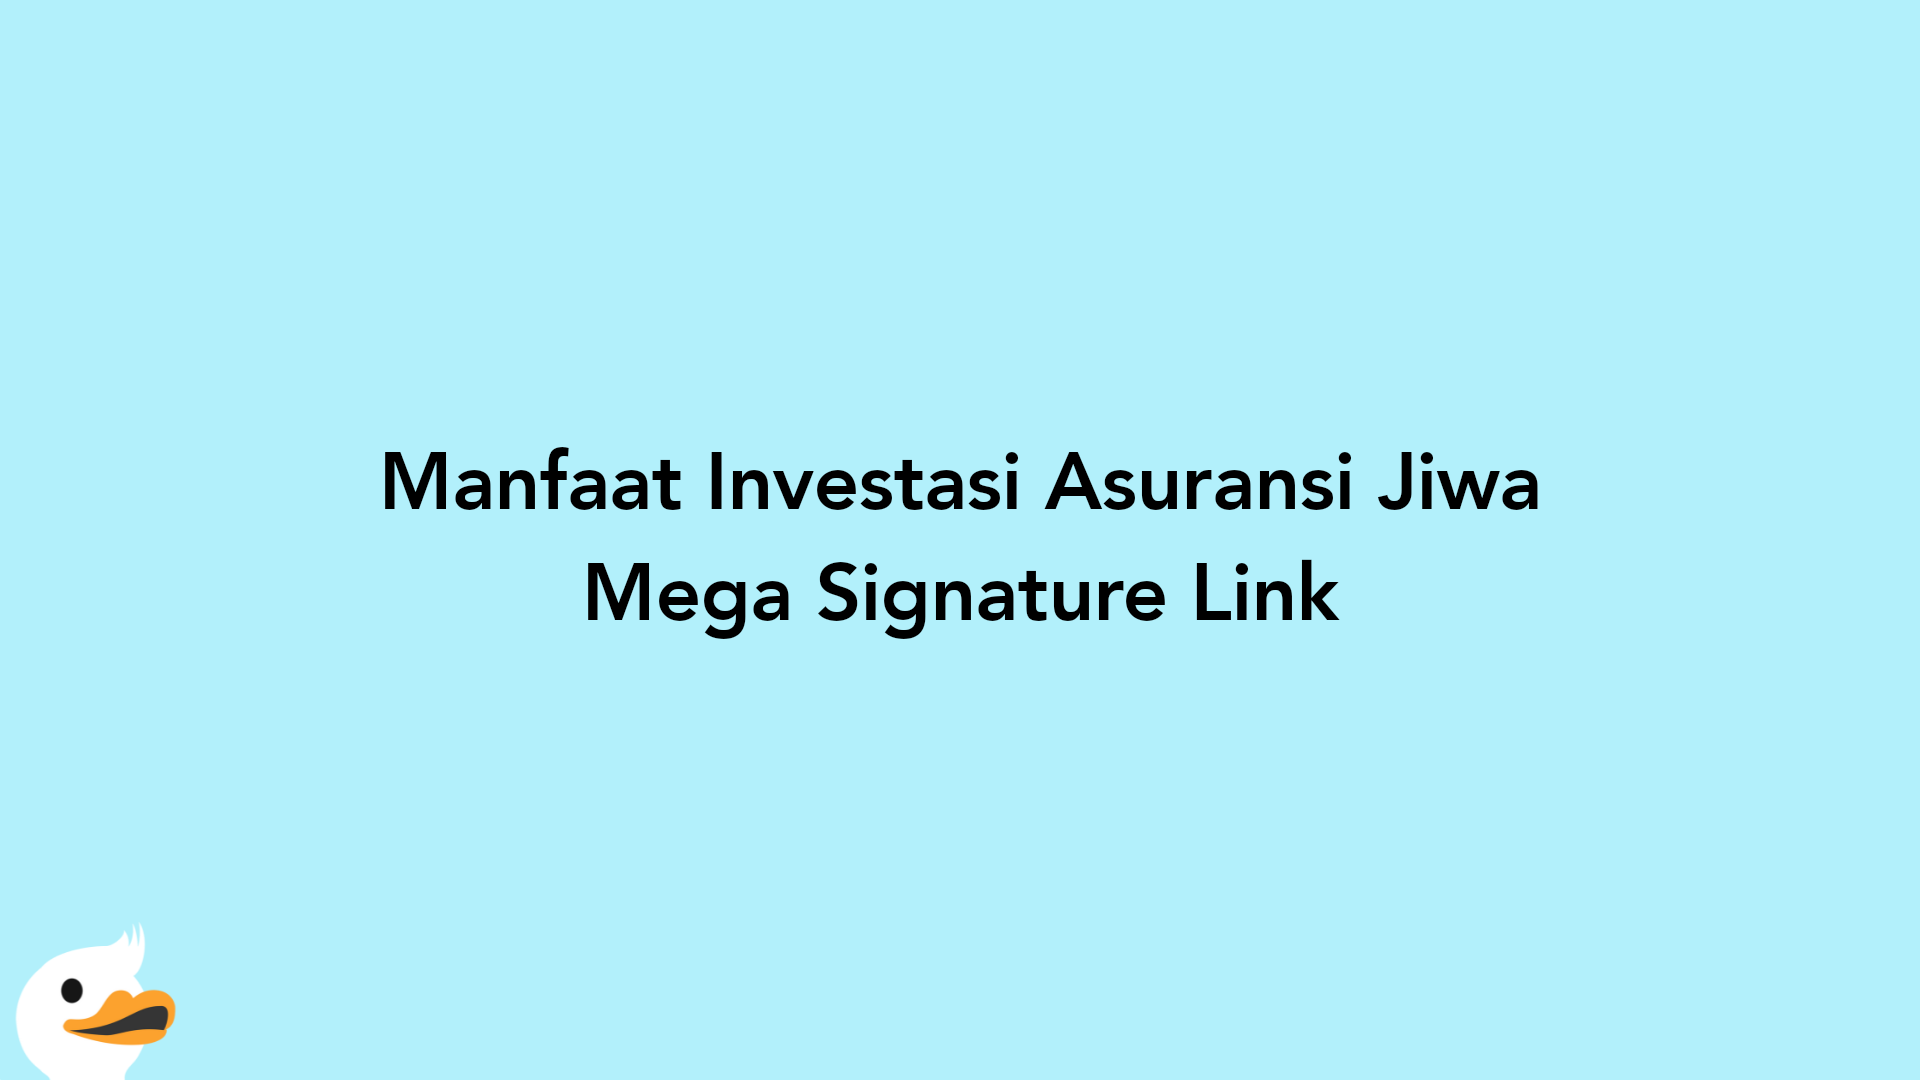 Manfaat Investasi Asuransi Jiwa Mega Signature Link